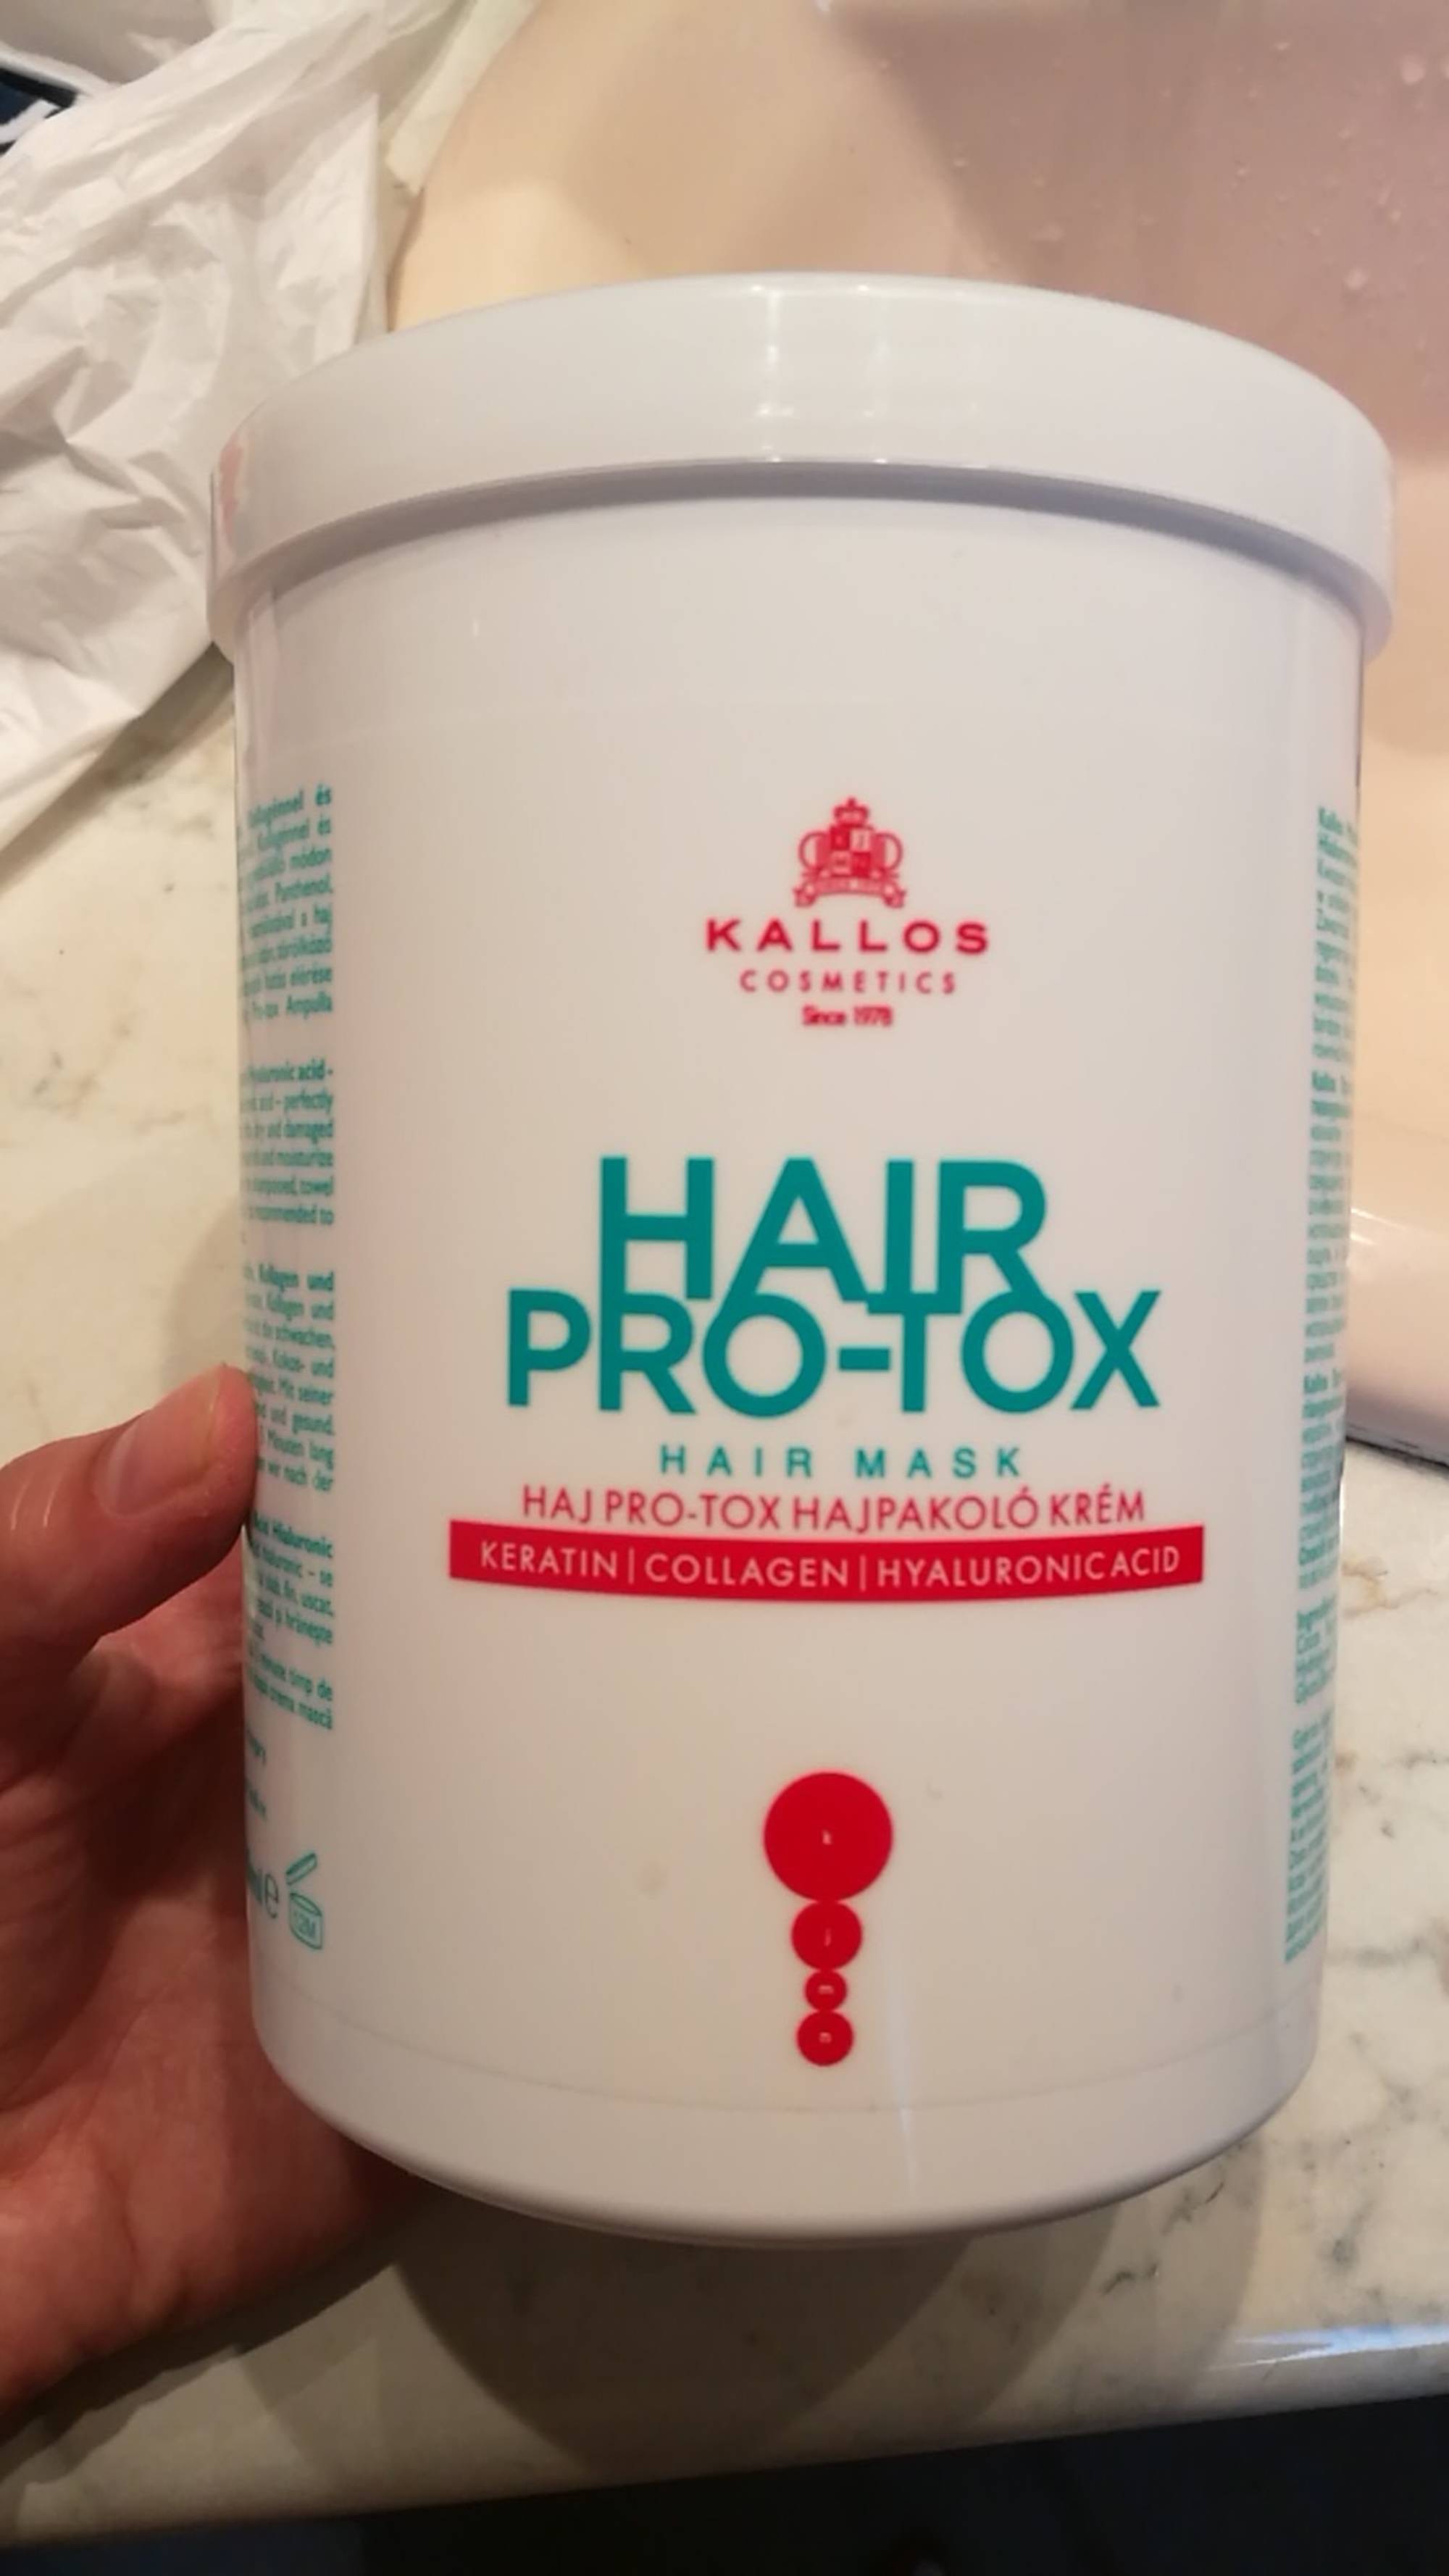 KALLOS COSMETICS - Hair pro-tox - Hair mask